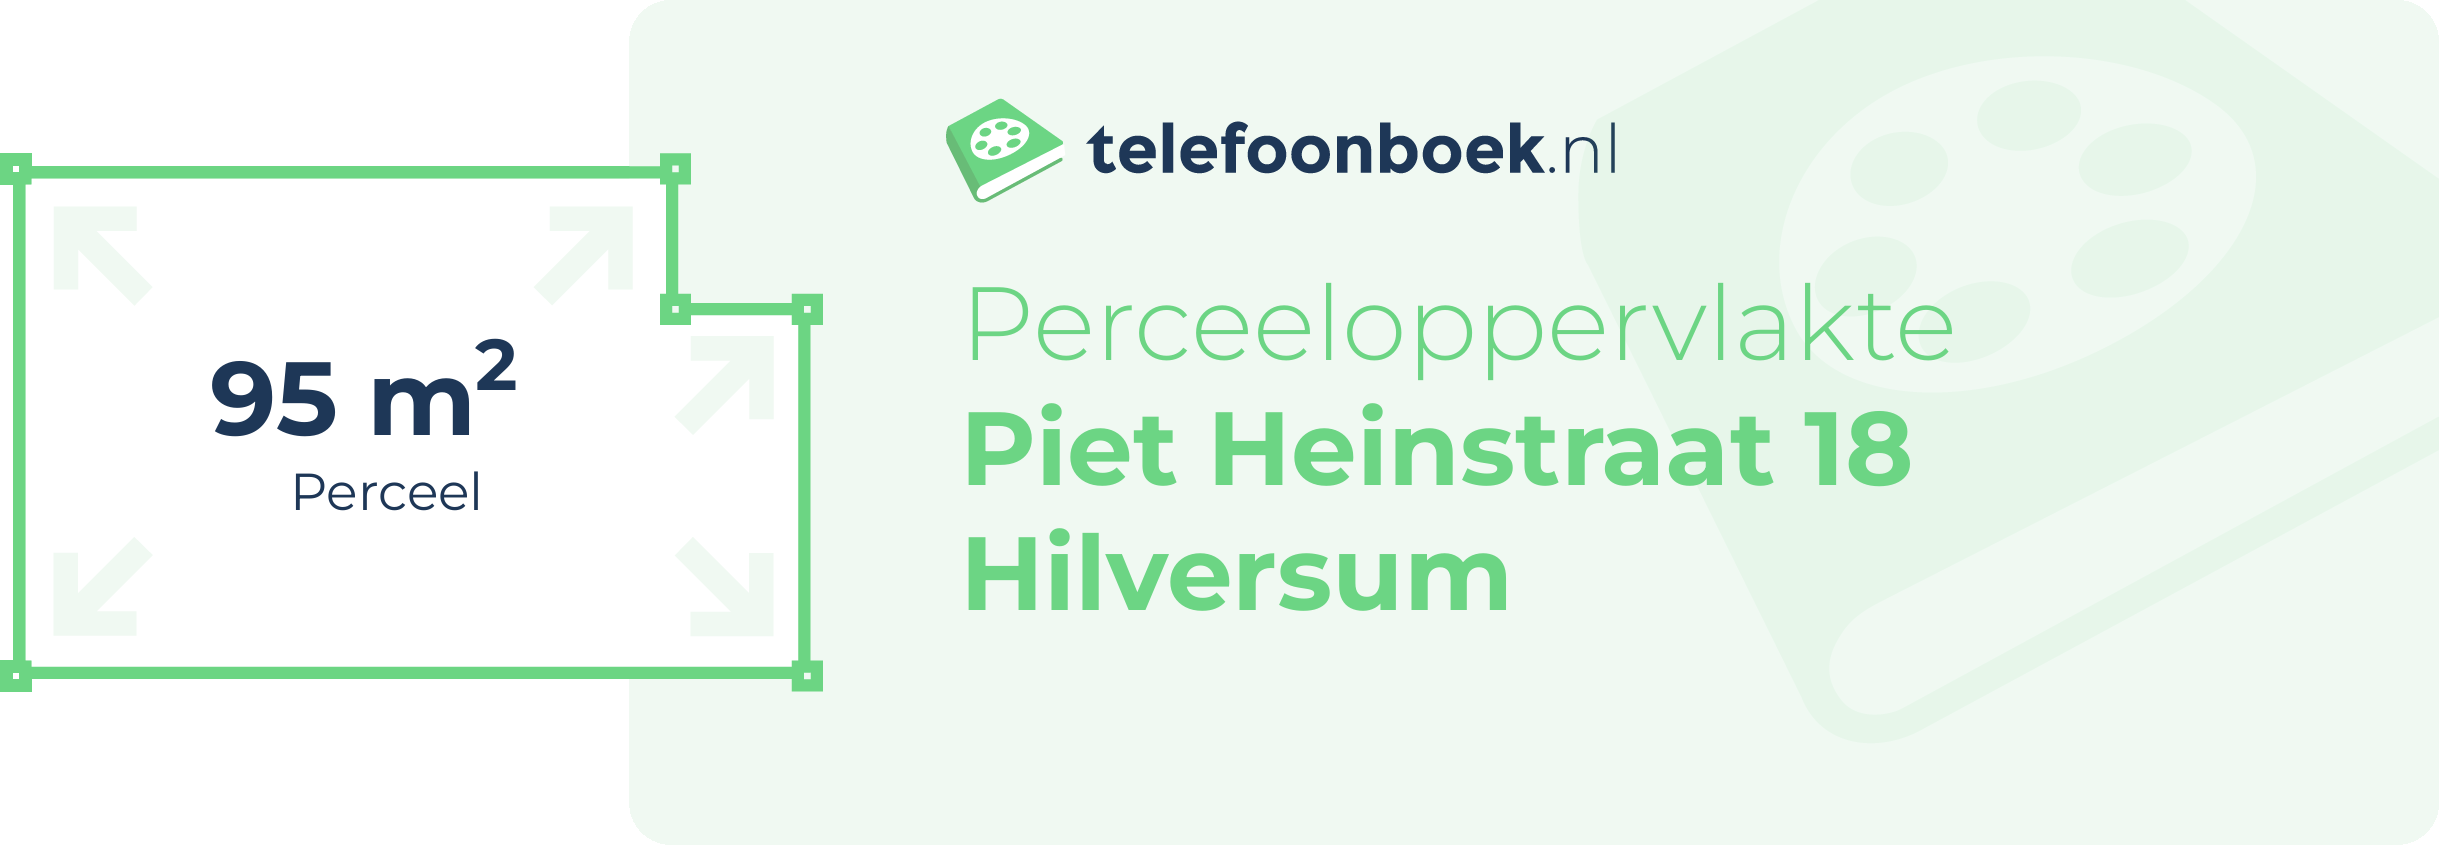 Perceeloppervlakte Piet Heinstraat 18 Hilversum